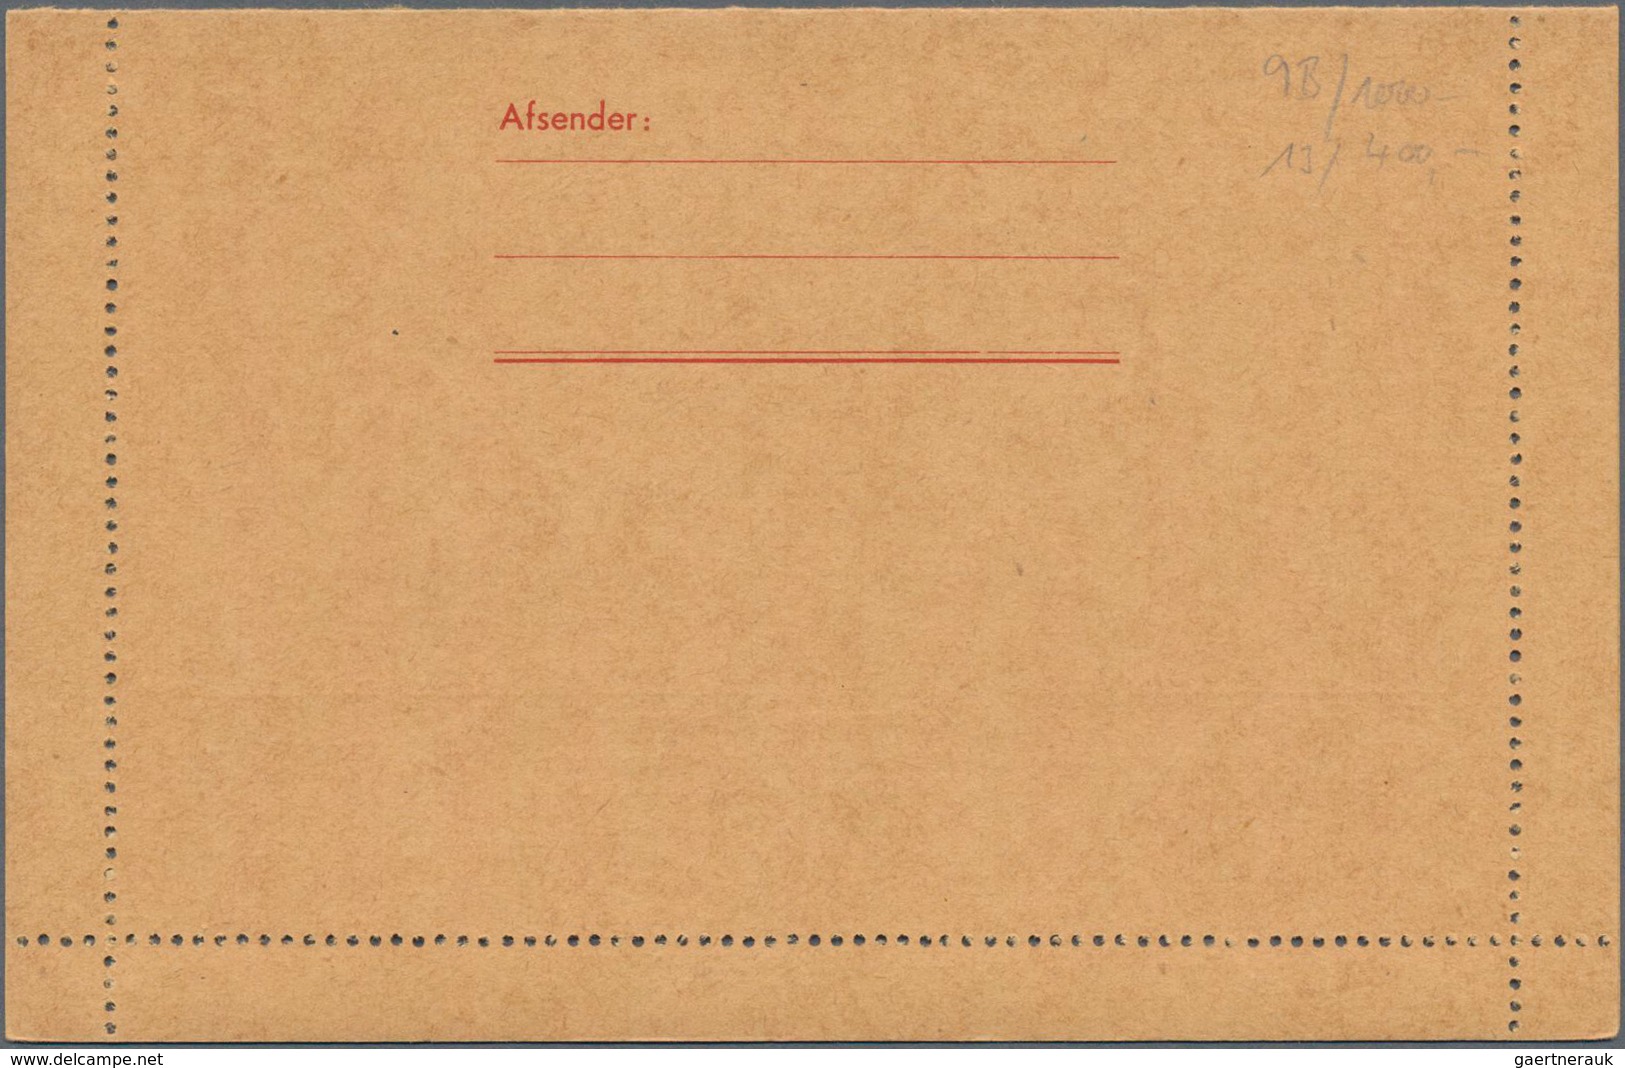 Dänemark - Ganzsachen: 1953/63 Four Unused Service Card Letters For The Personal Register, 360 M€, V - Postwaardestukken